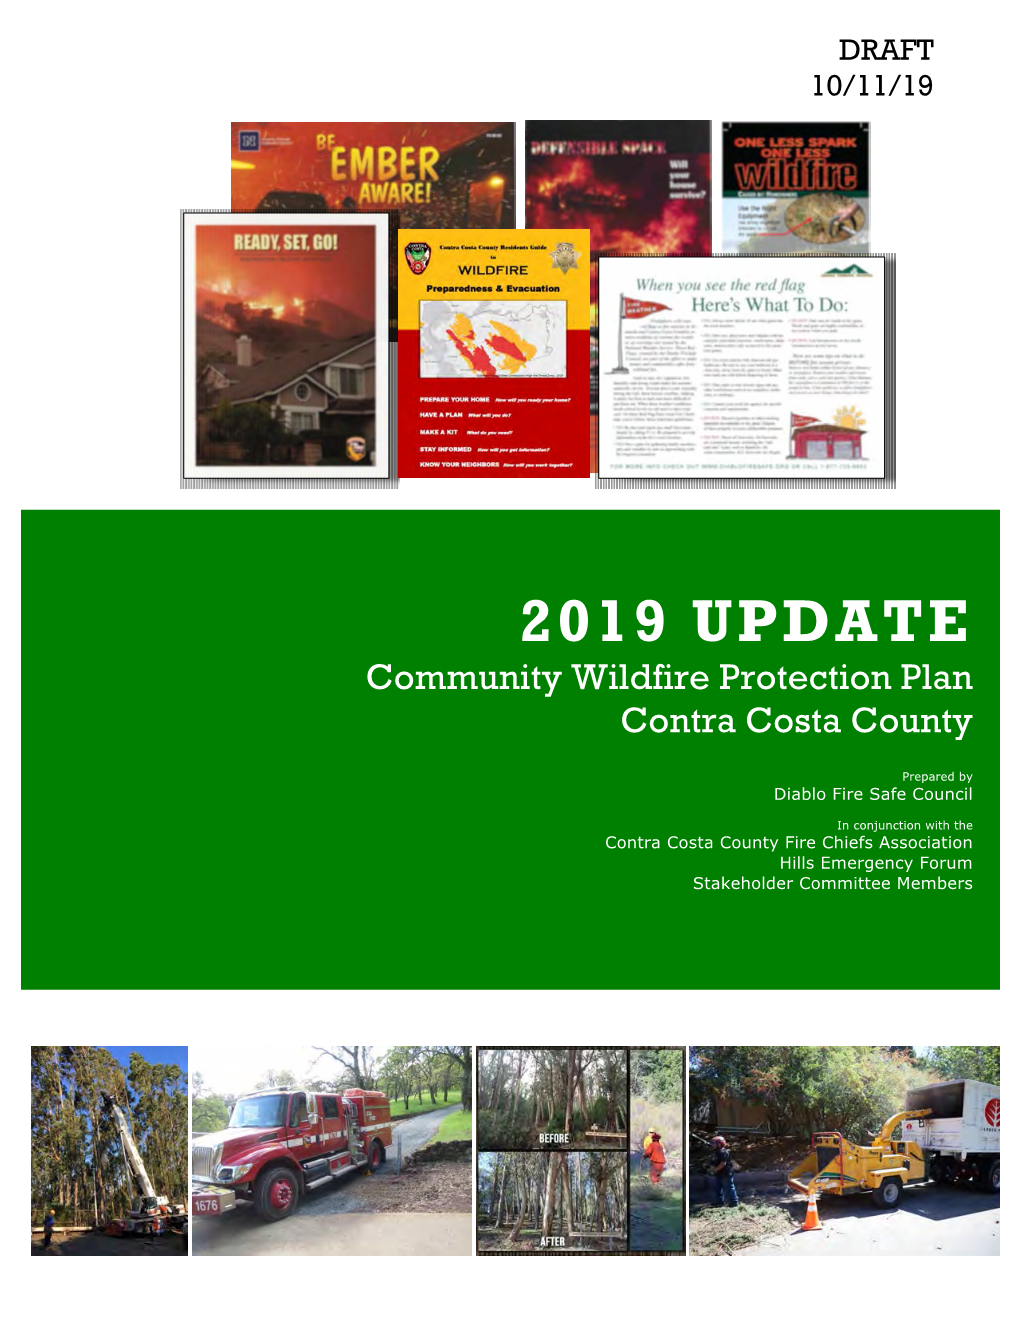 Draft Contra Costa County CWPP 2019 Update